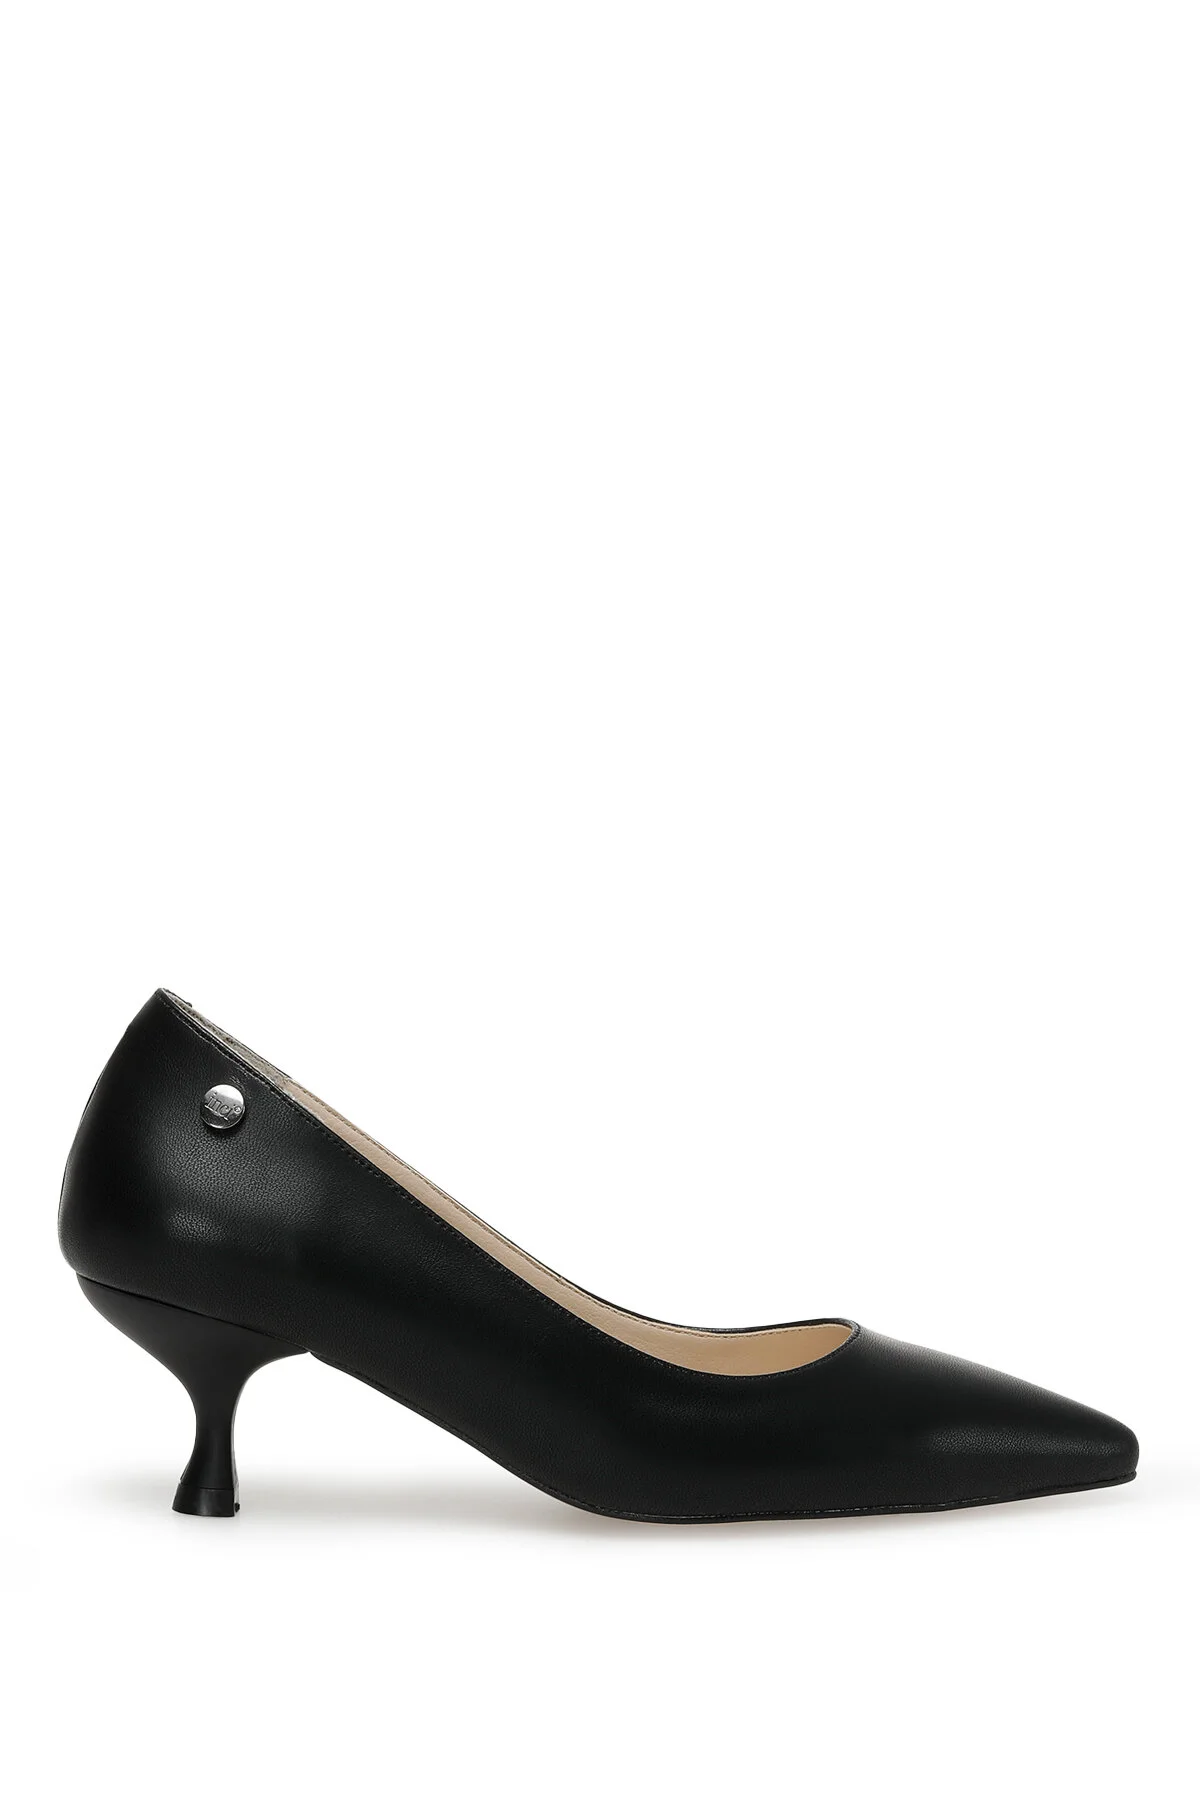 İNCİ - TRUDY 3FX Kadın Topuklu Ayakkabı-Siyah